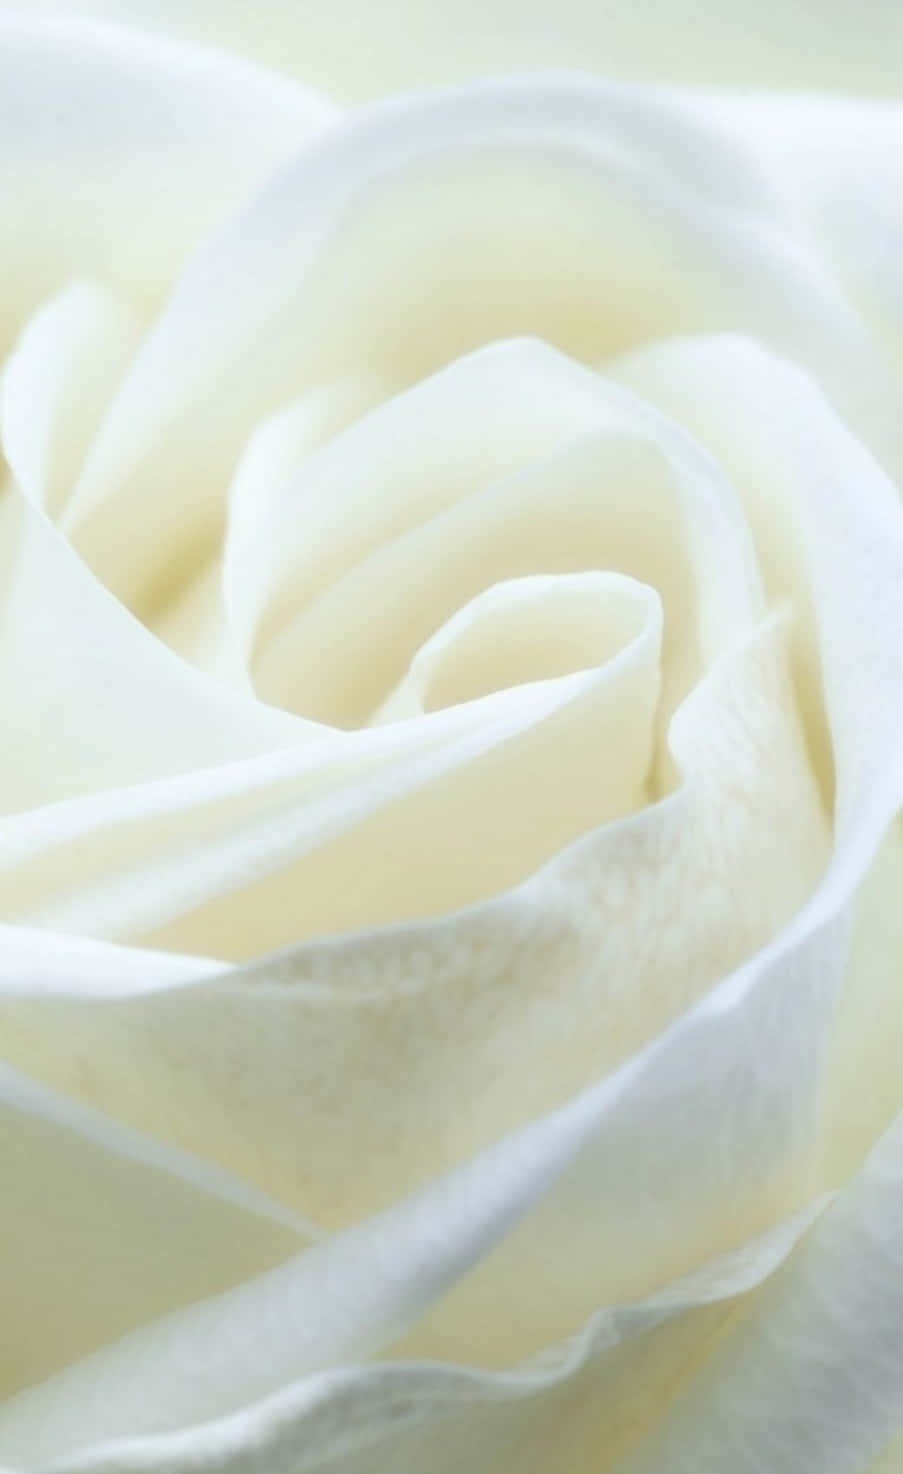 White Roses Iphone Wallpaper